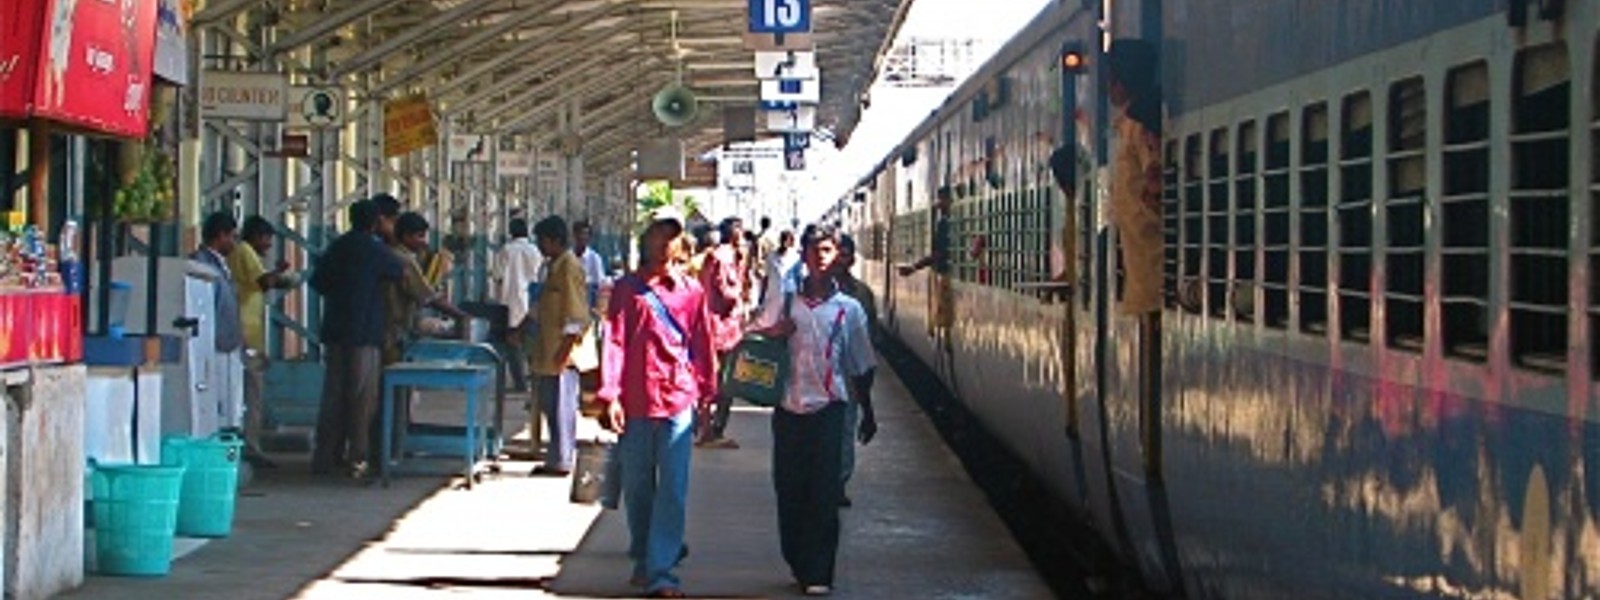 Railways resumes operations despite low work force